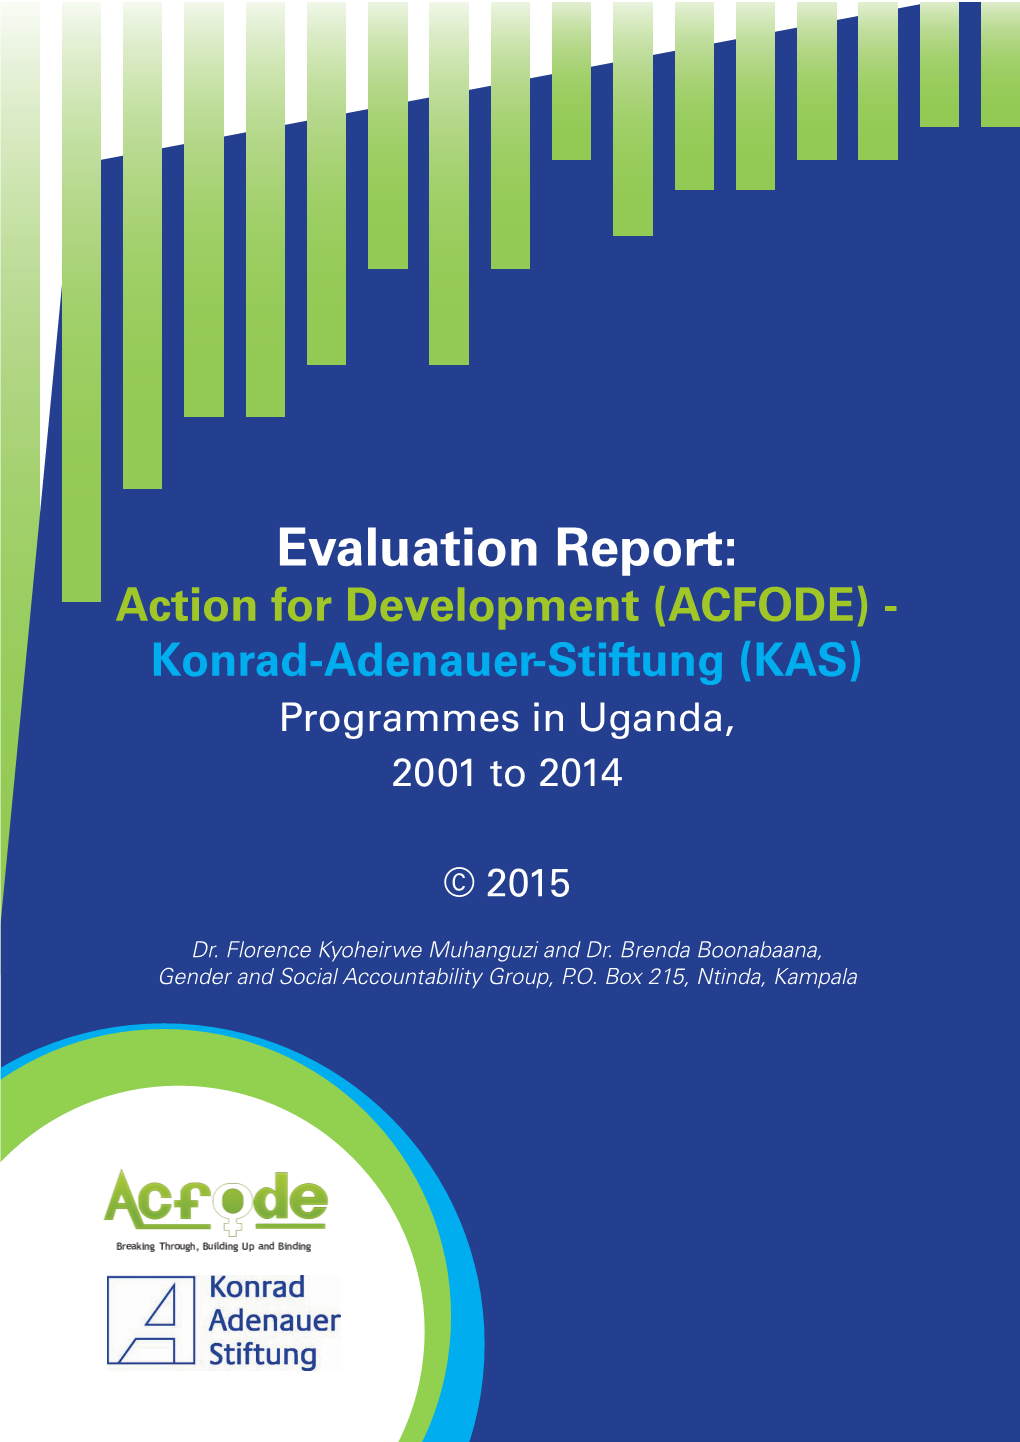 ACFODE) - Konrad-Adenauer-Stiftung (KAS) Programmes in Uganda, 2001 to 2014